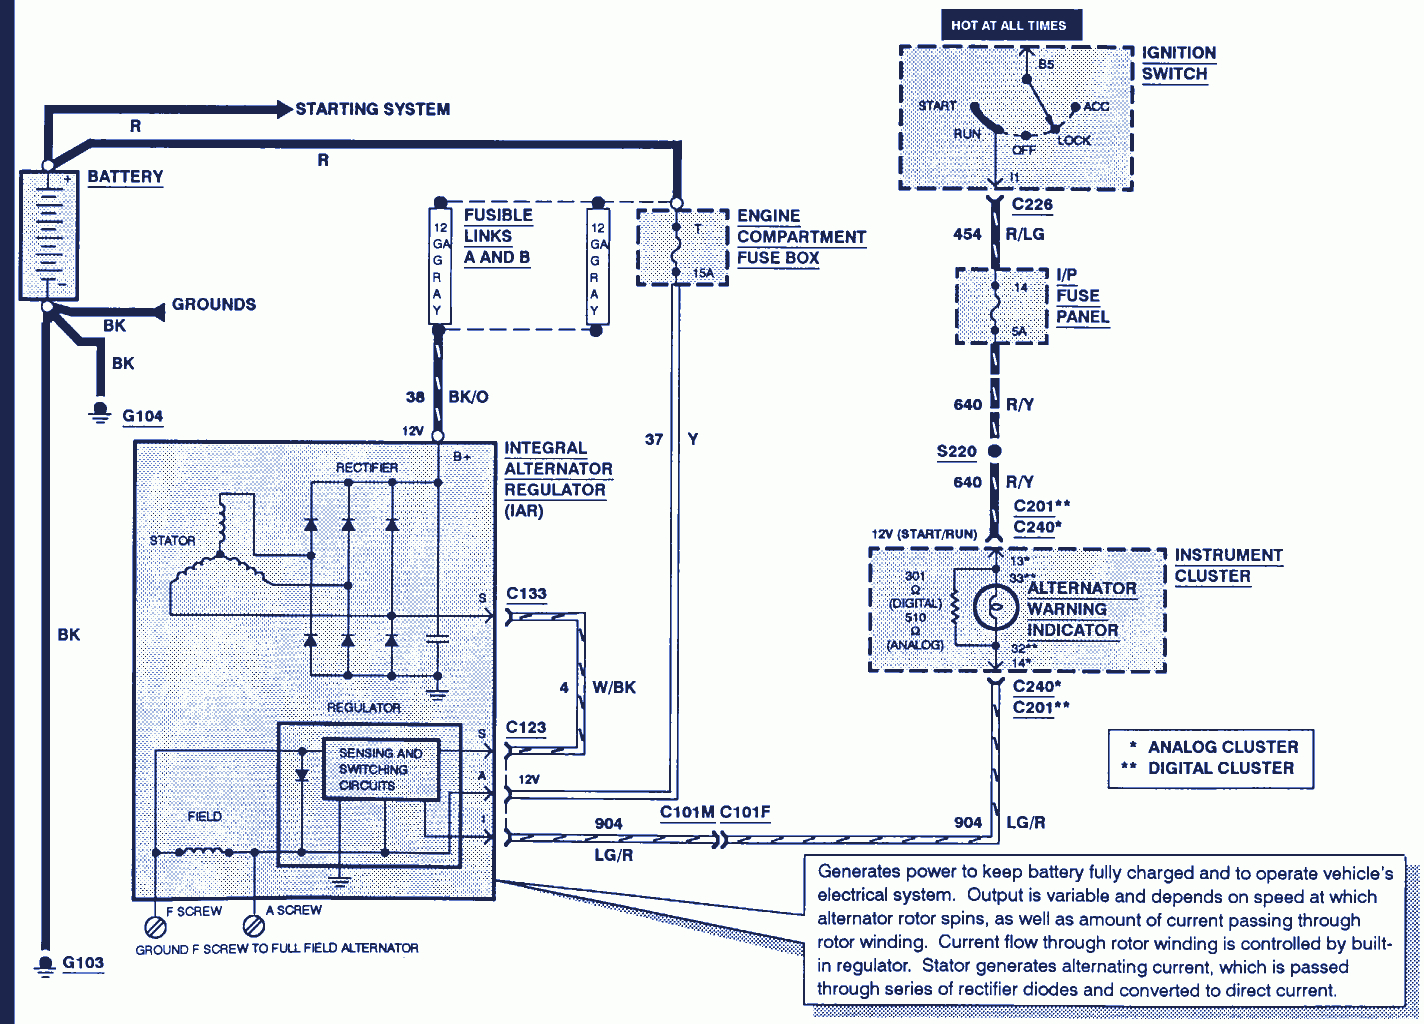 2000 Mustang Spark Plug Wiring Diagram | Wiring Diagram - 2001 Ford Mustang Spark Plug Wiring Diagram